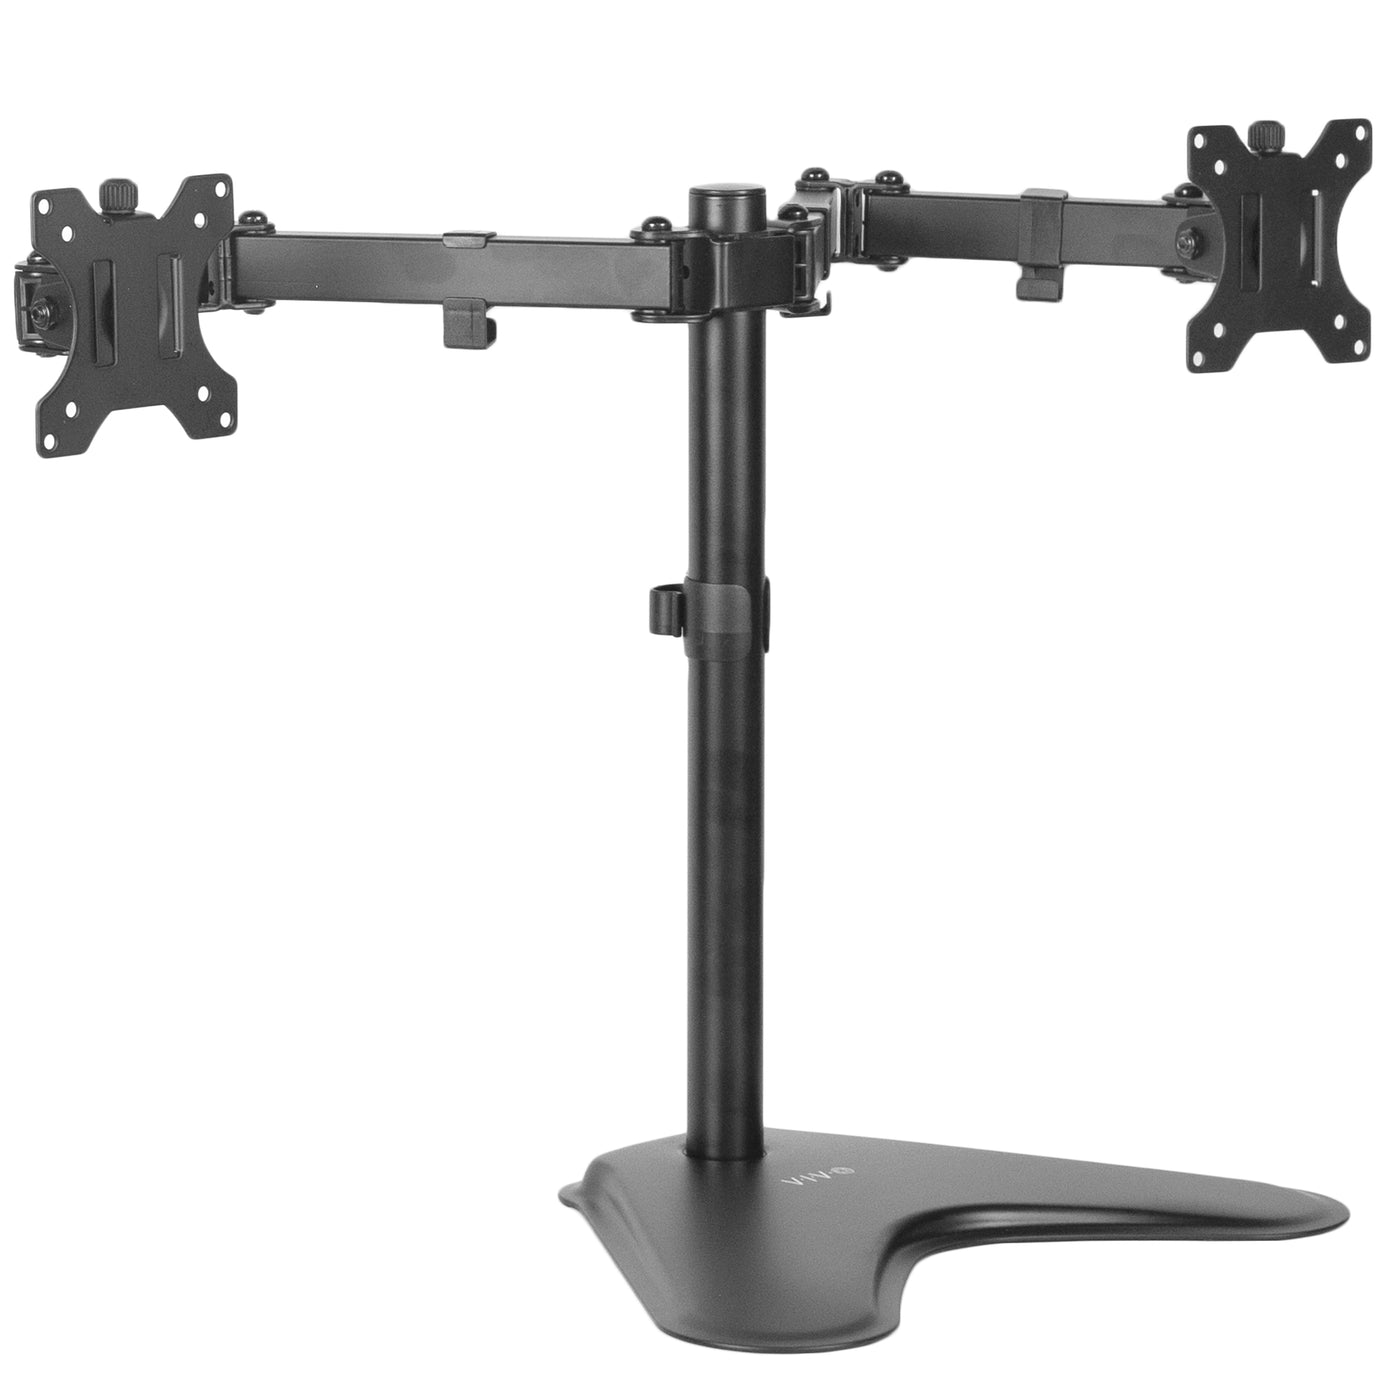 Sturdy adjustable dual monitor ergonomic desk mount for office workstation.